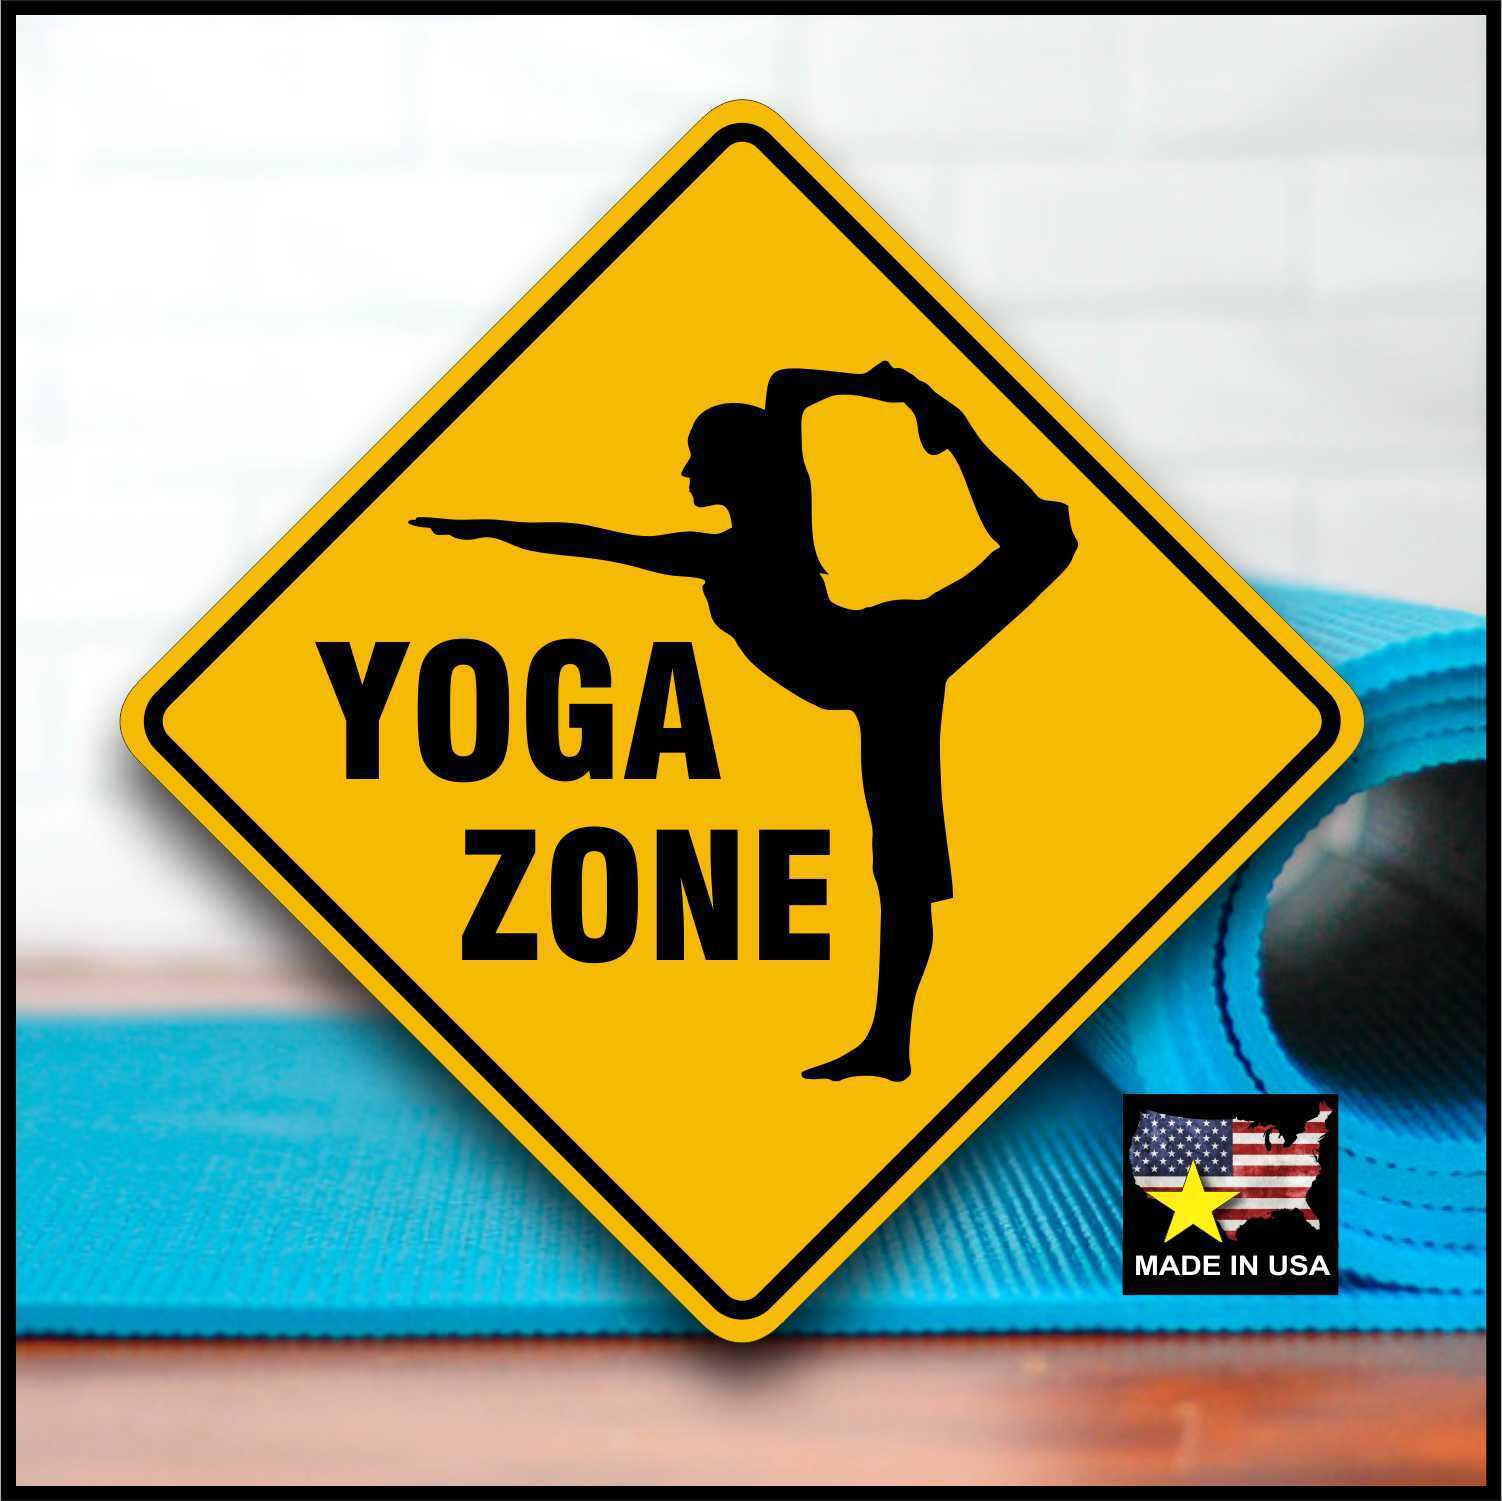 YOGA ZONE - Inspirational Fitness Sign - Aluminum - Pilates - Fun Excercise Gift